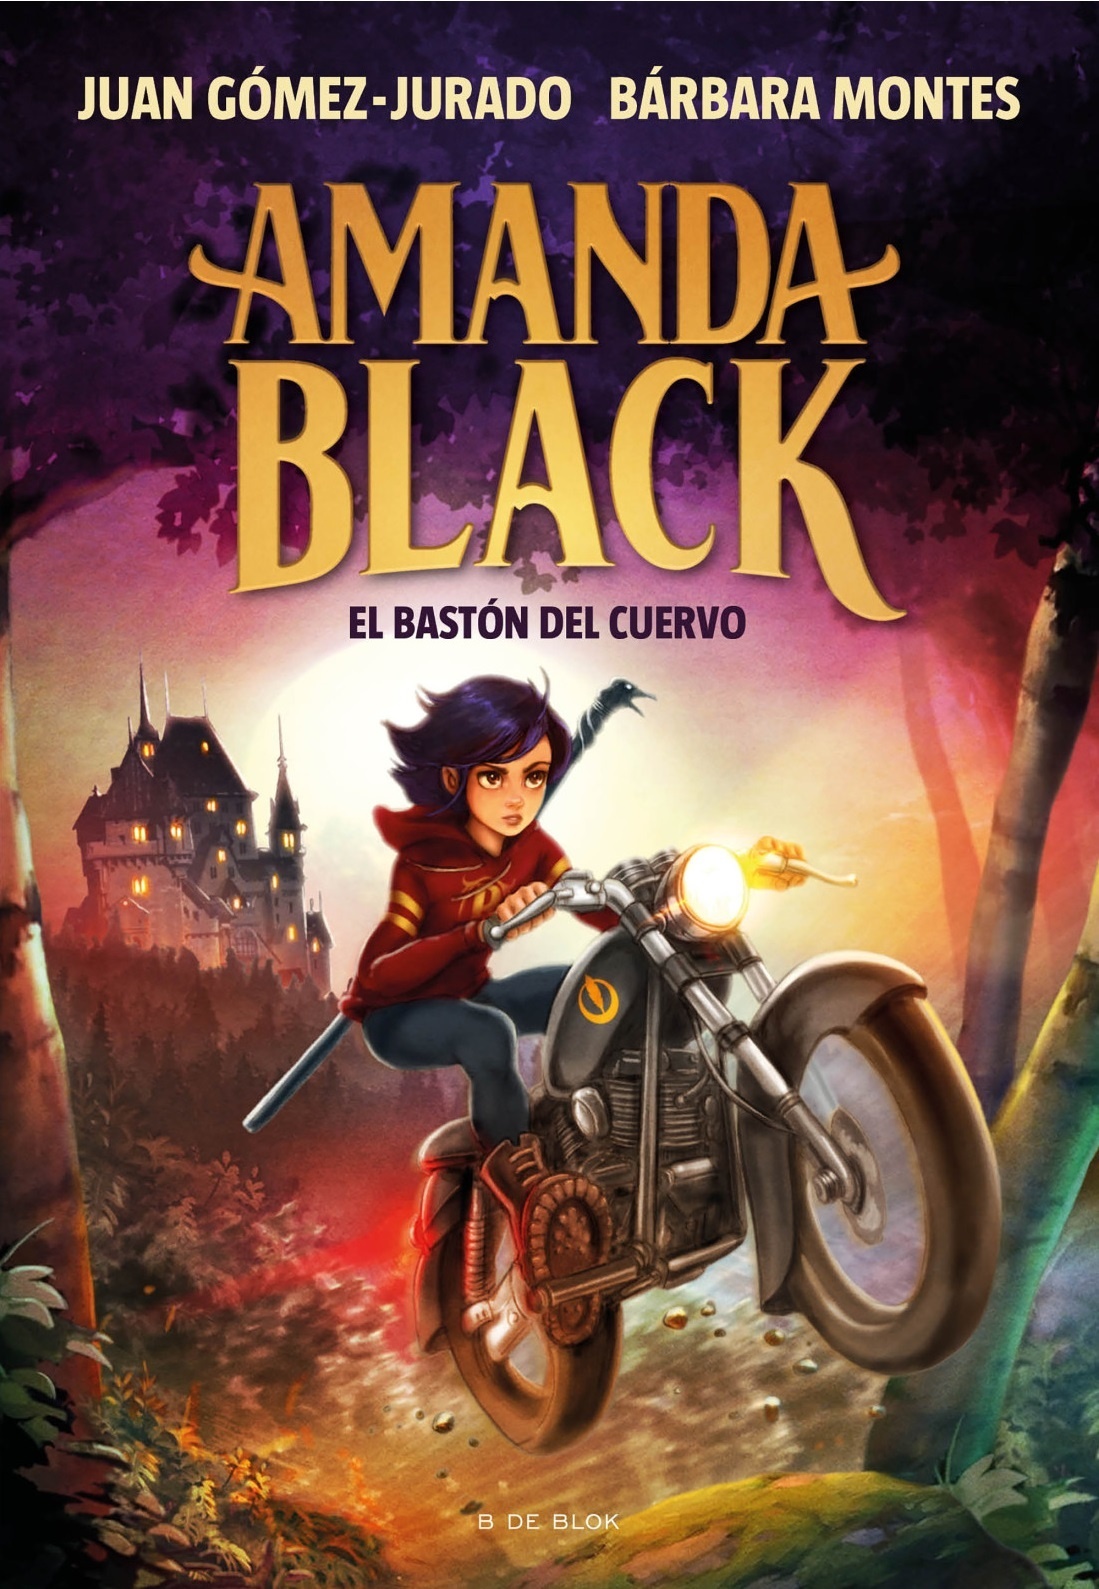 Bastón del cuervo, El "Amanda Black 7". 